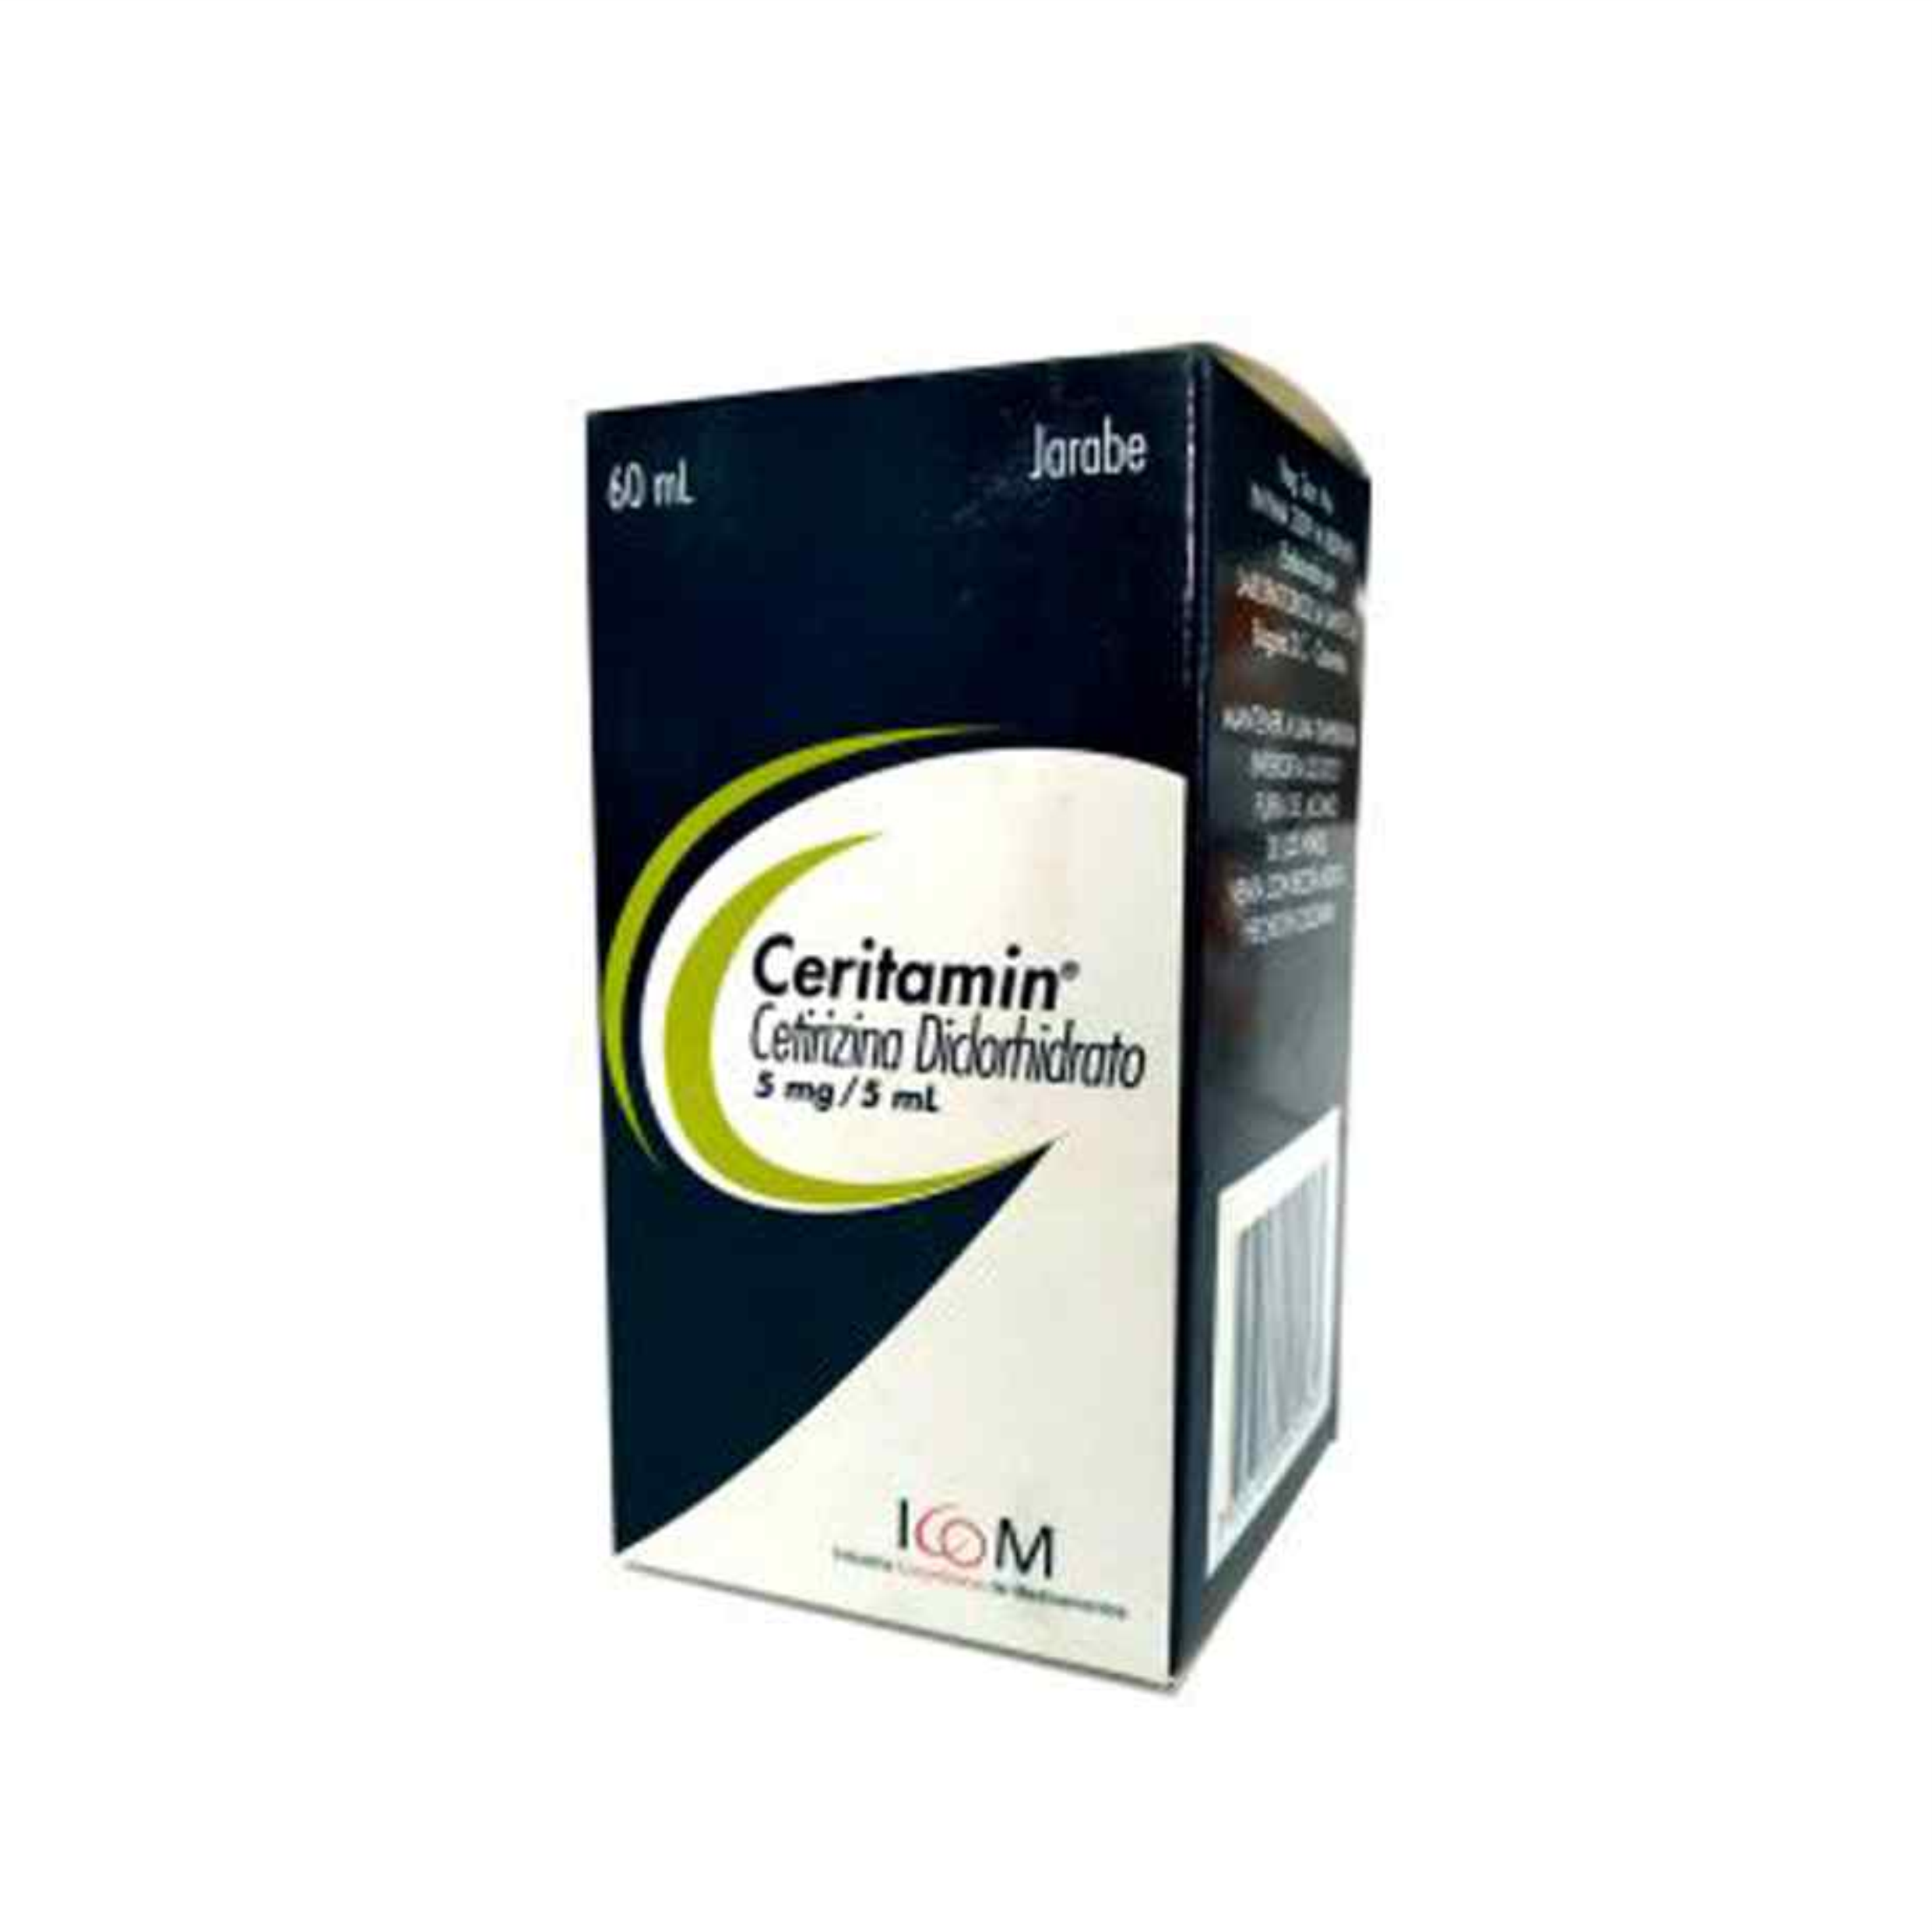 Ceritamin Jarabe 60 mL - 5 mg/5 mL